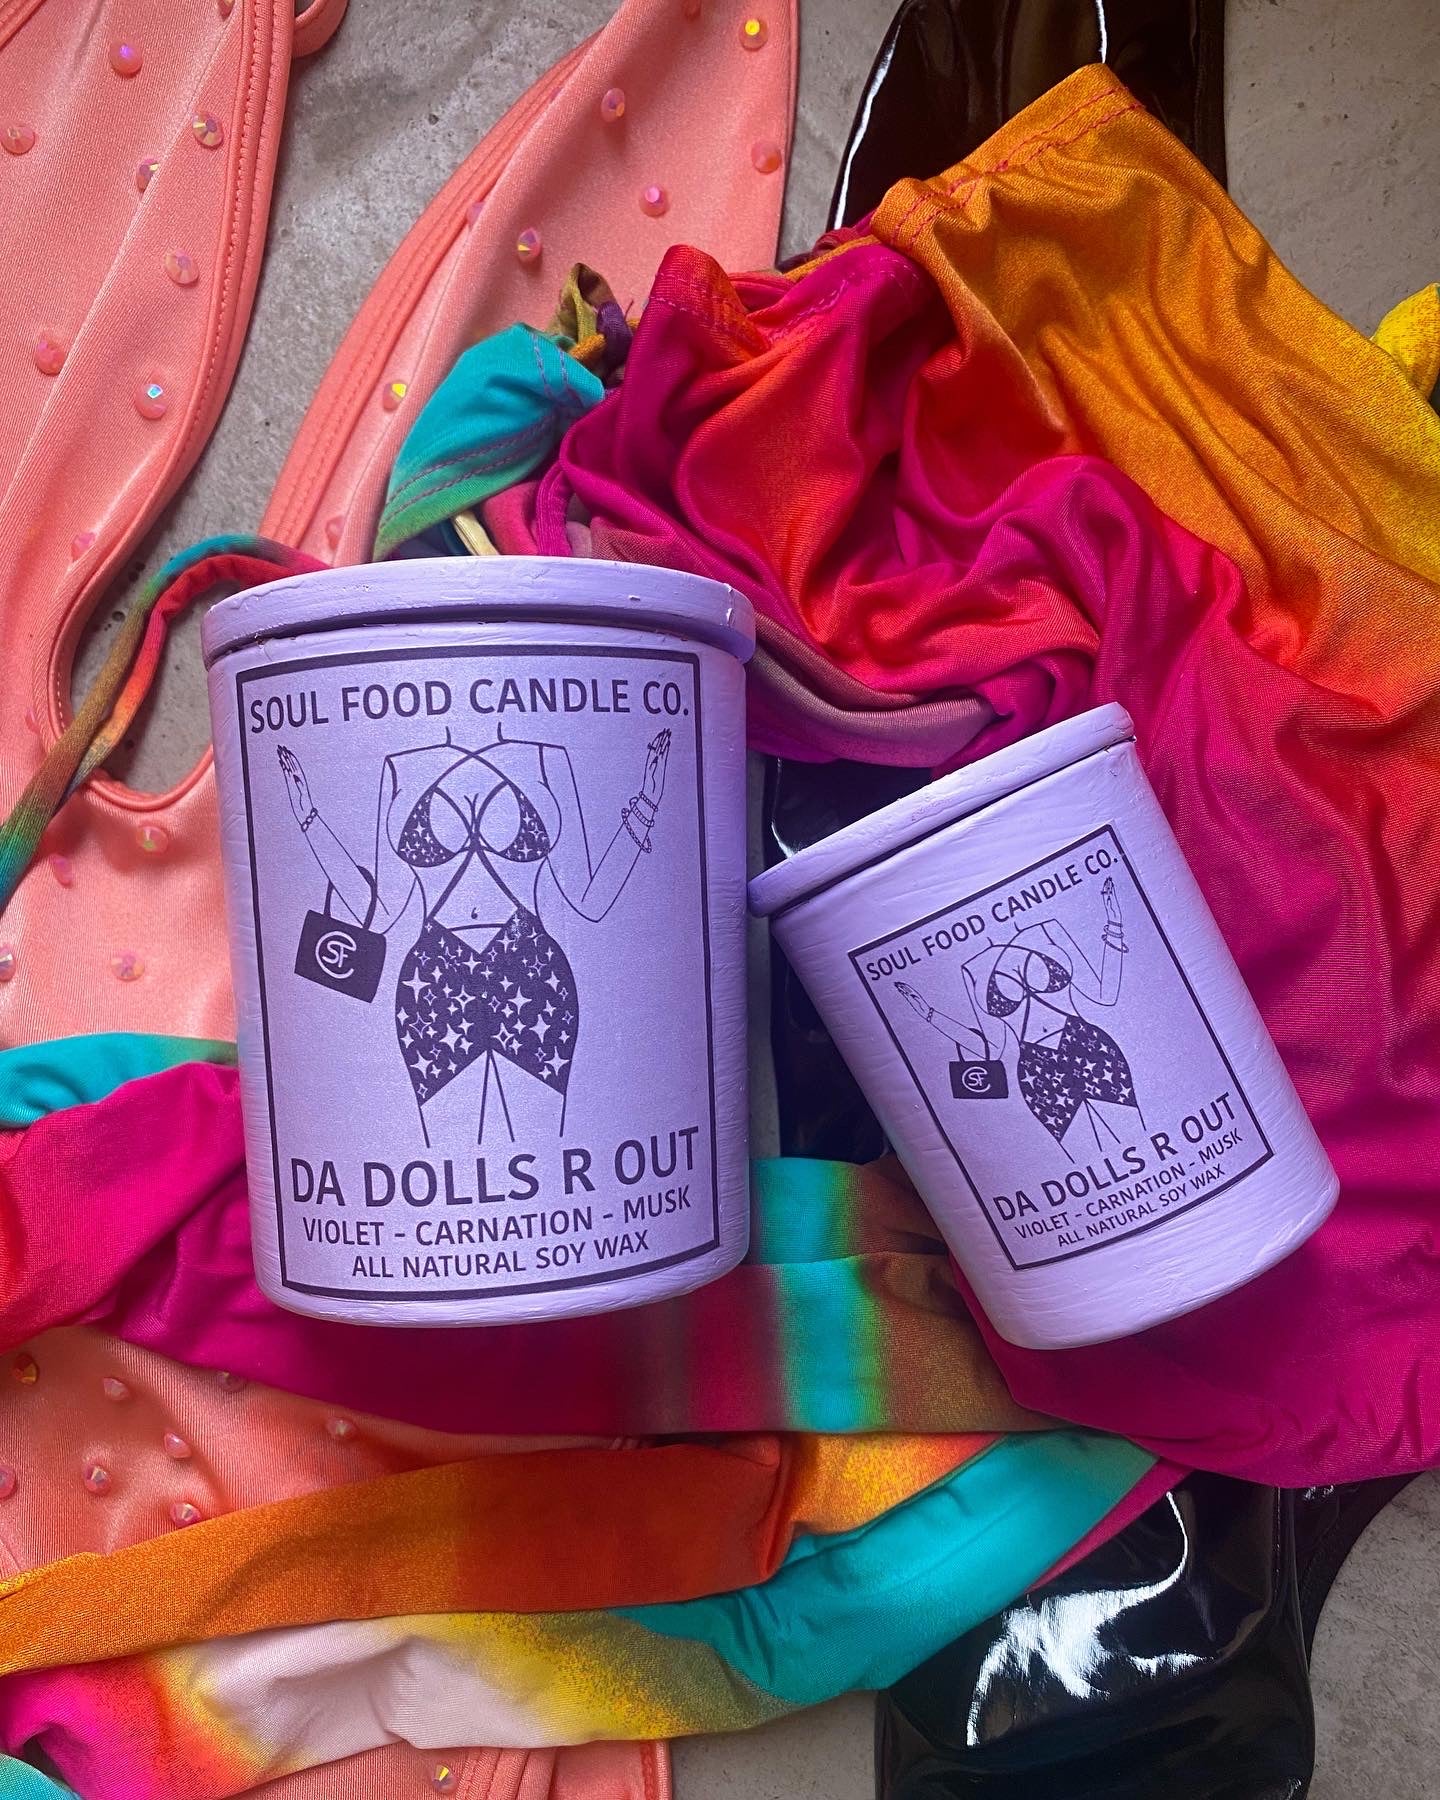 Da Dolls R Out - Soul Food Candle Company